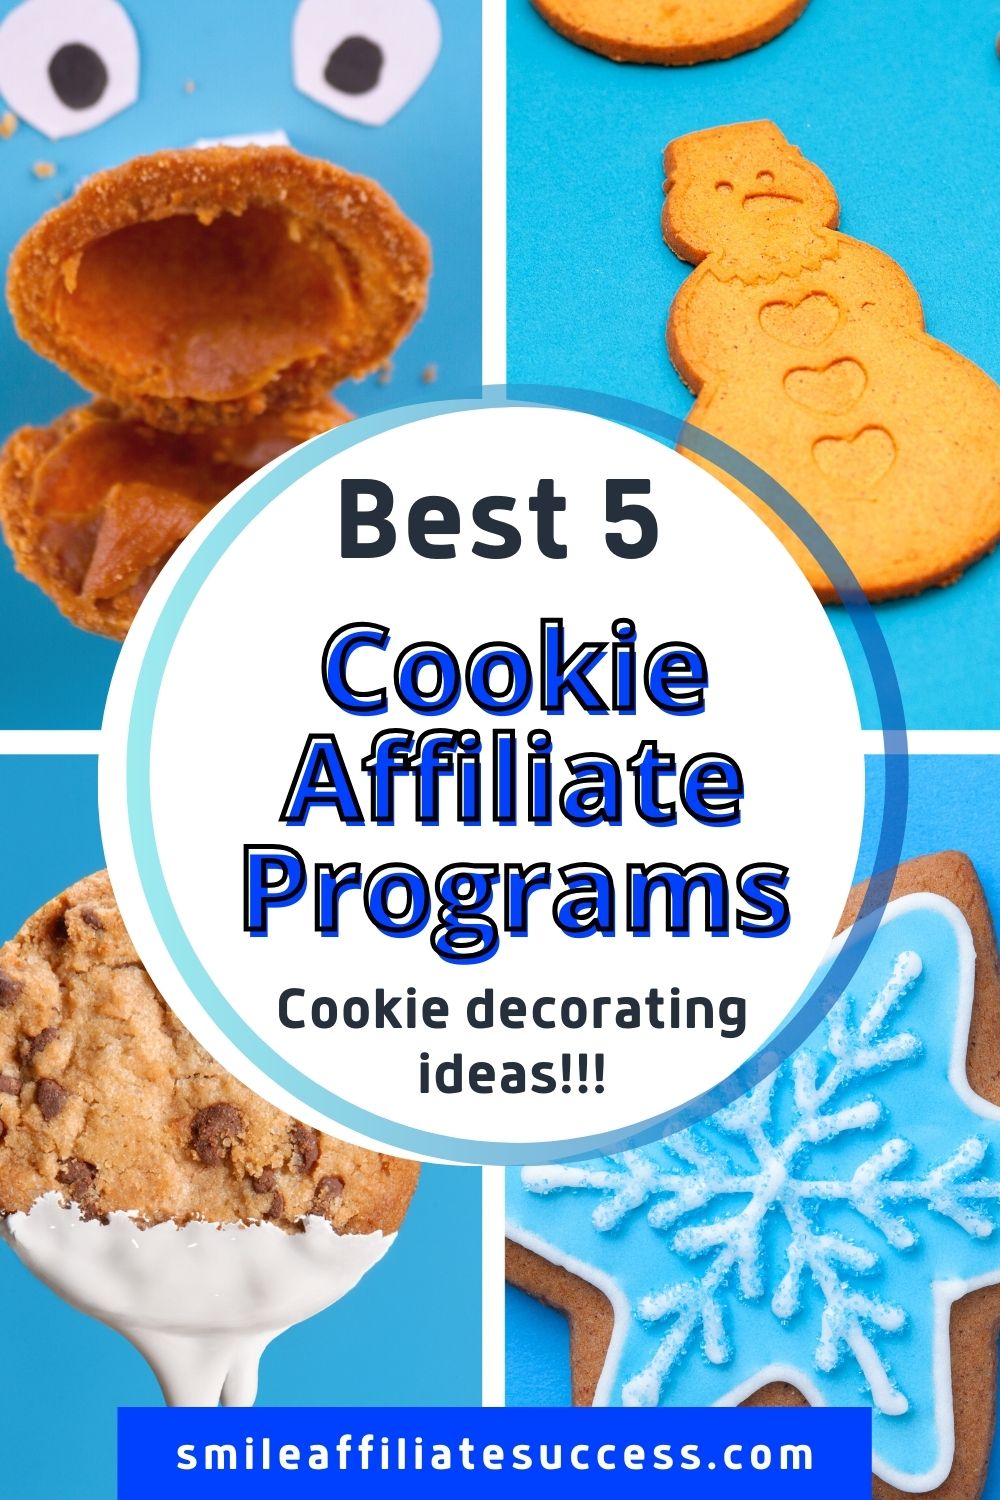 Best 5 Cookie Affiliate Programs